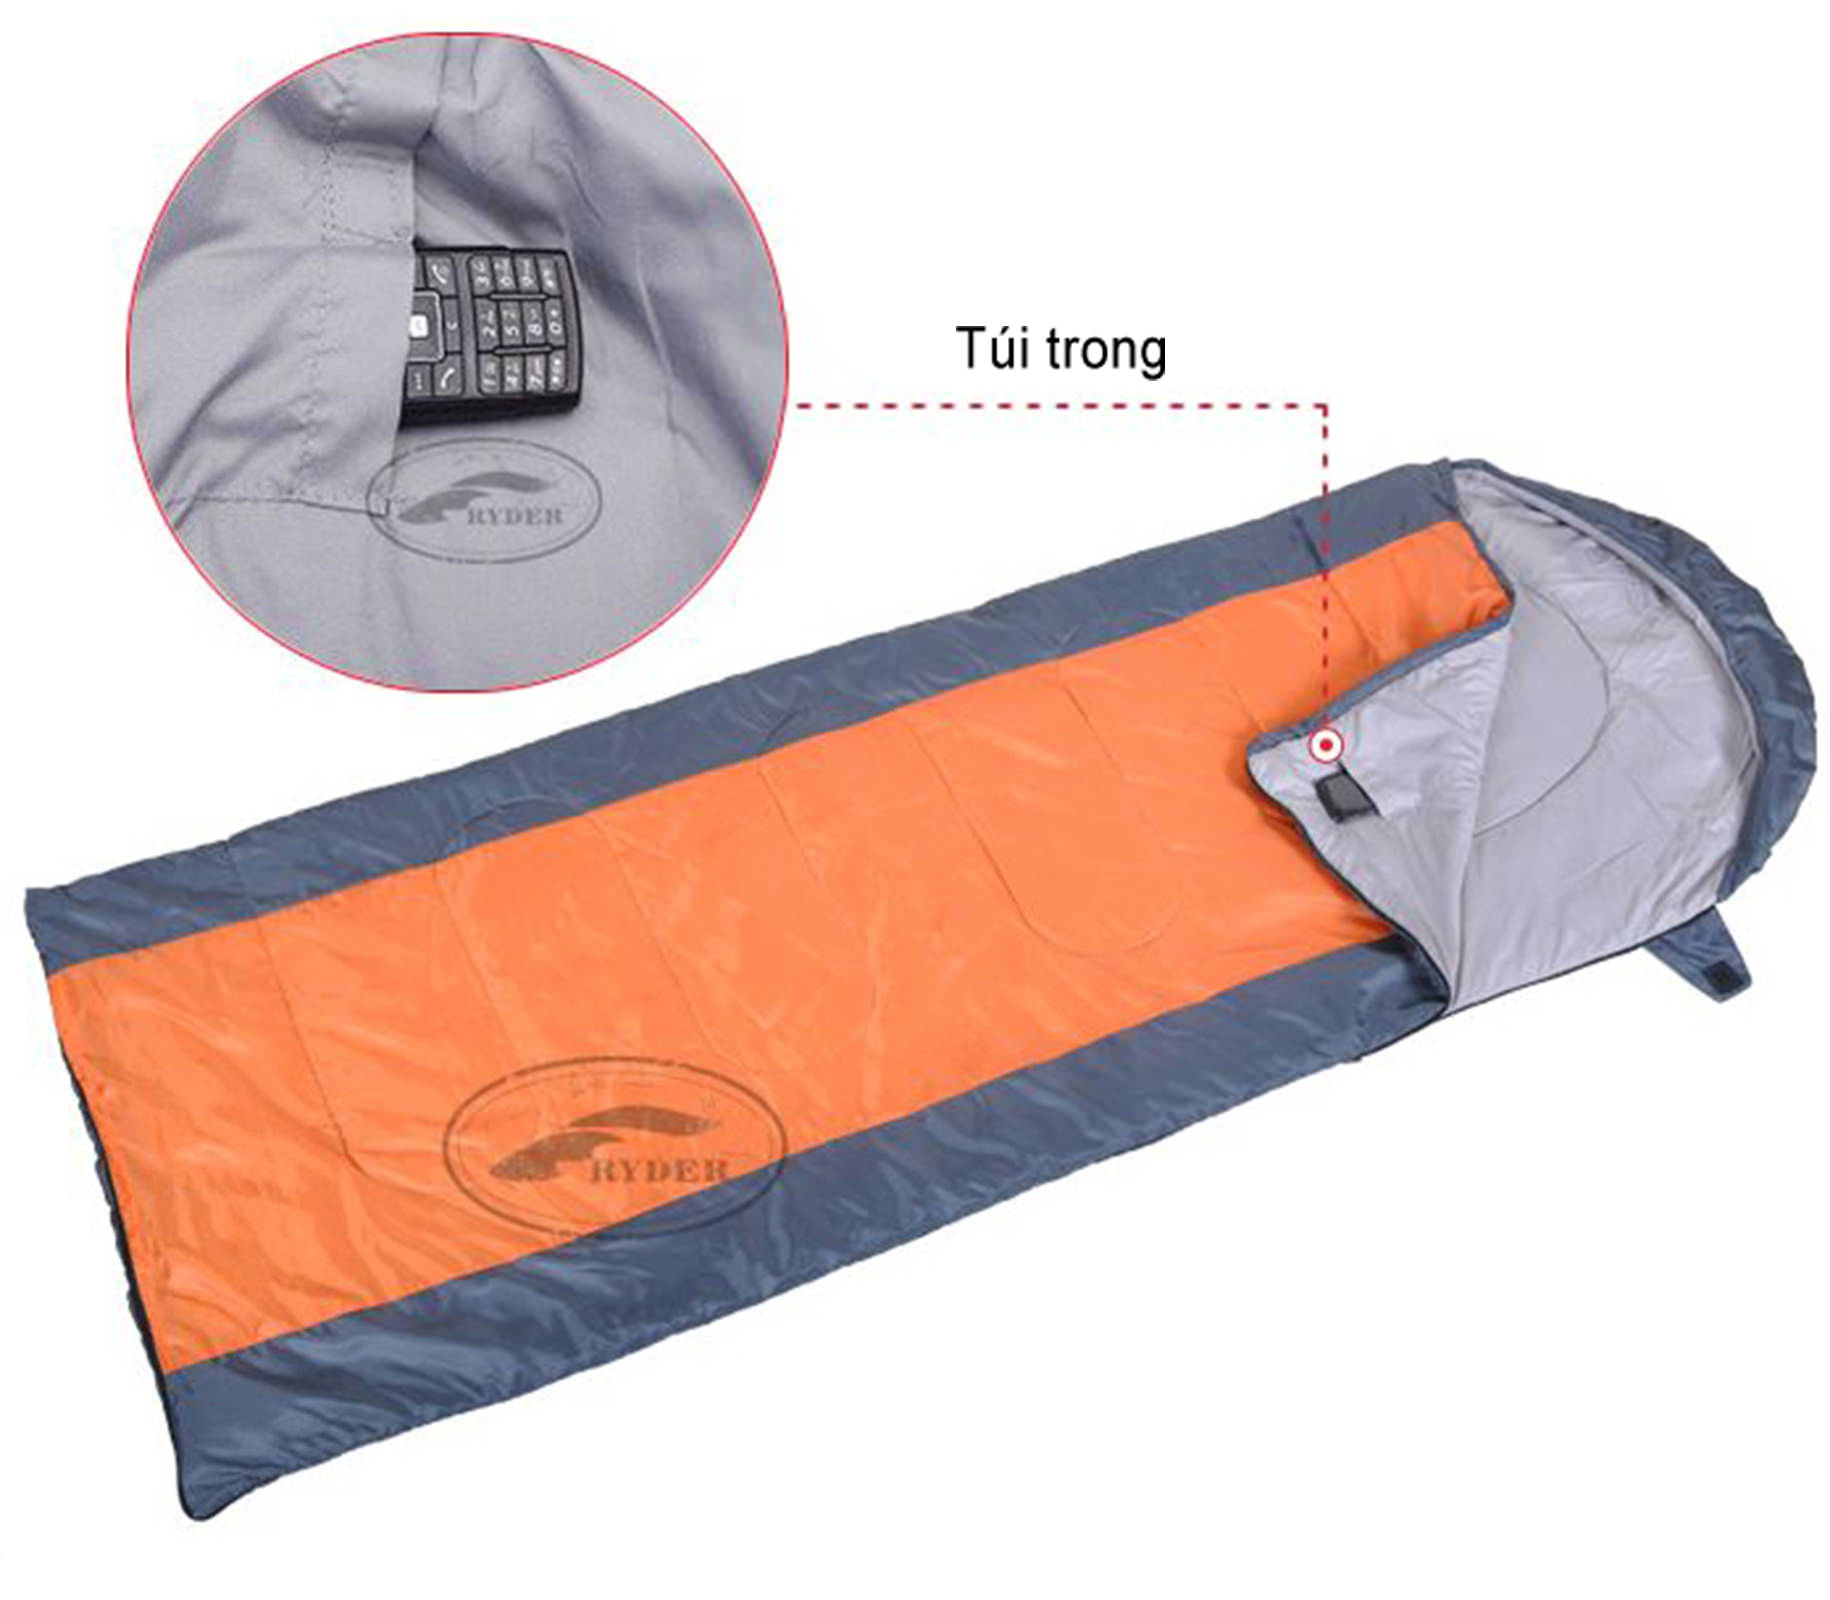 tui-ngu-ryder-envelope-sleeping-bag-d1002-orange-7483-wetrek_vn-2